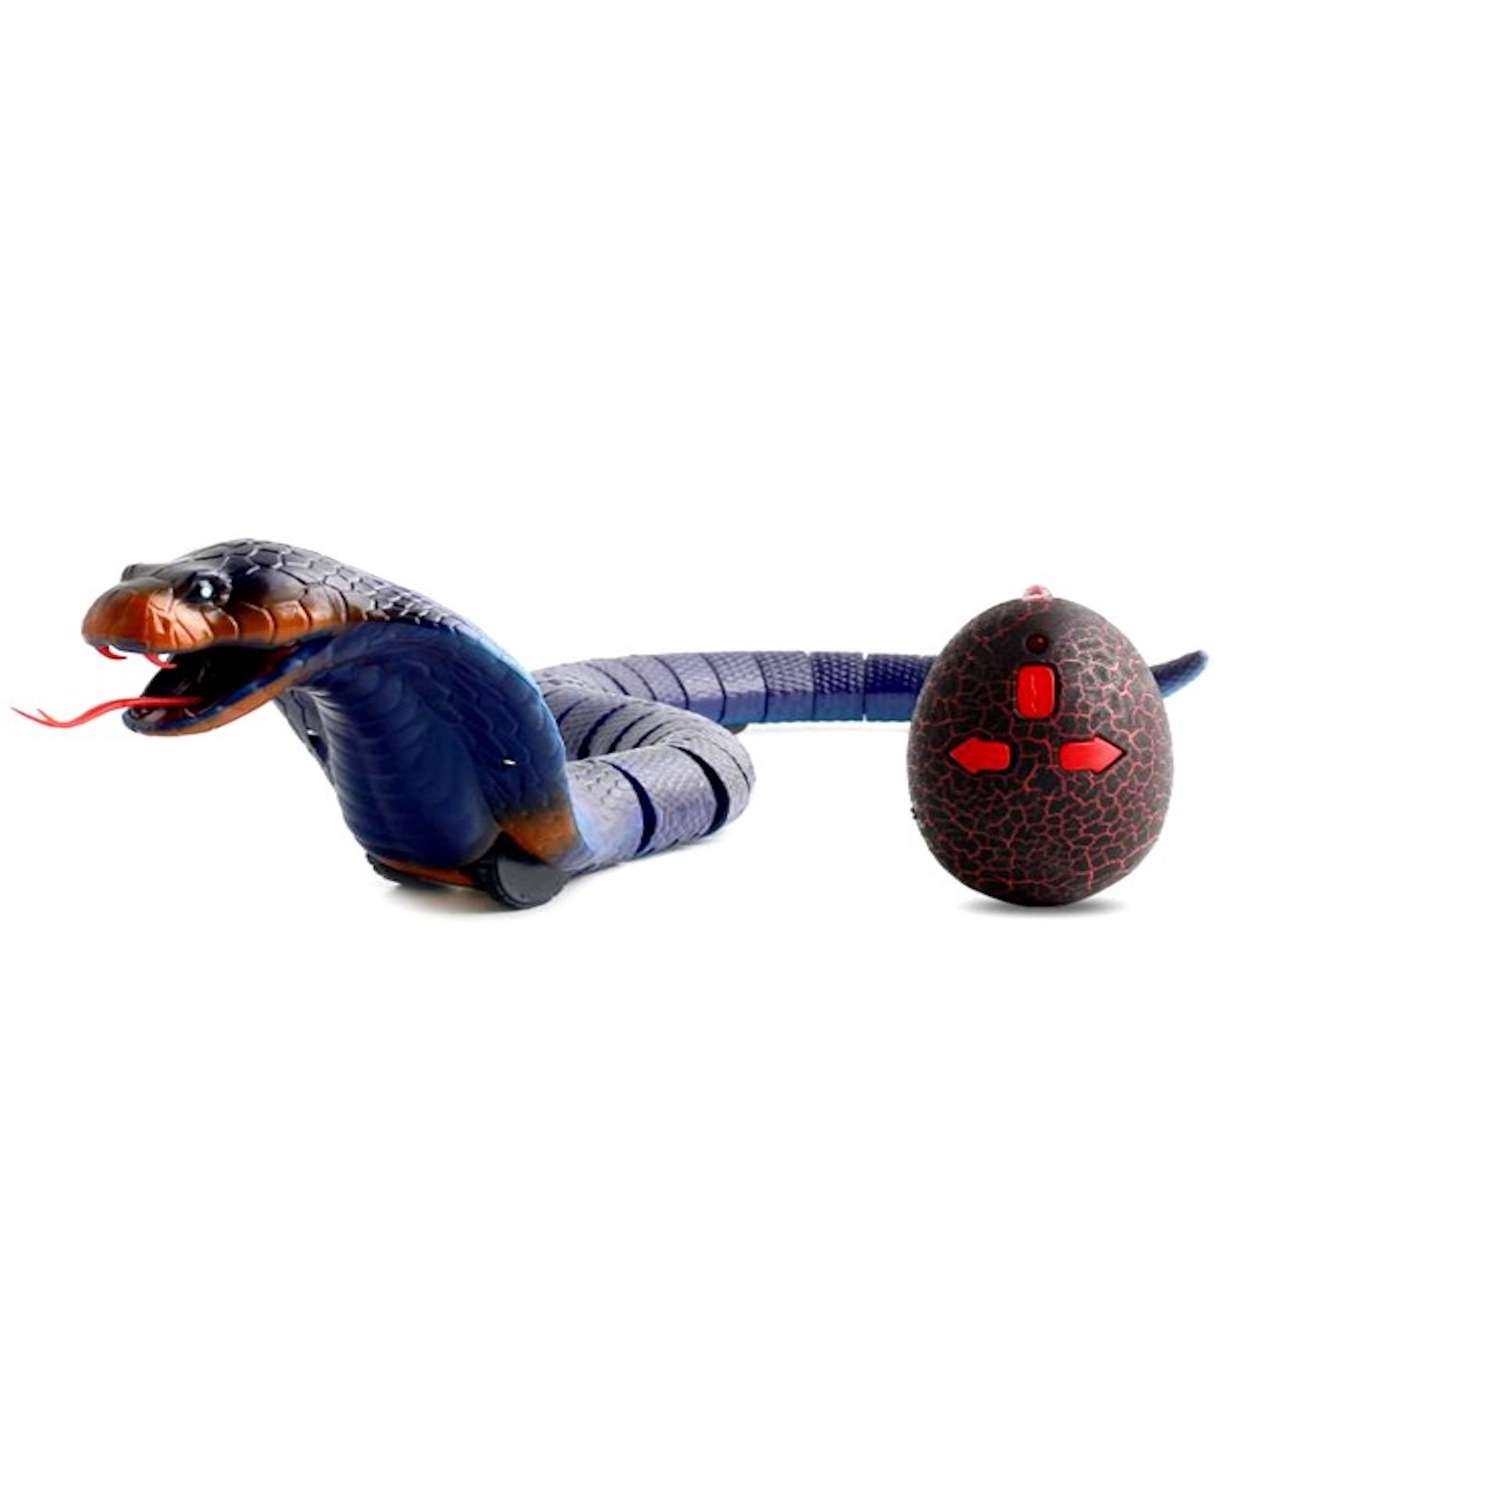 Робот змея ZF best fun toys на пульте управления - фото 1